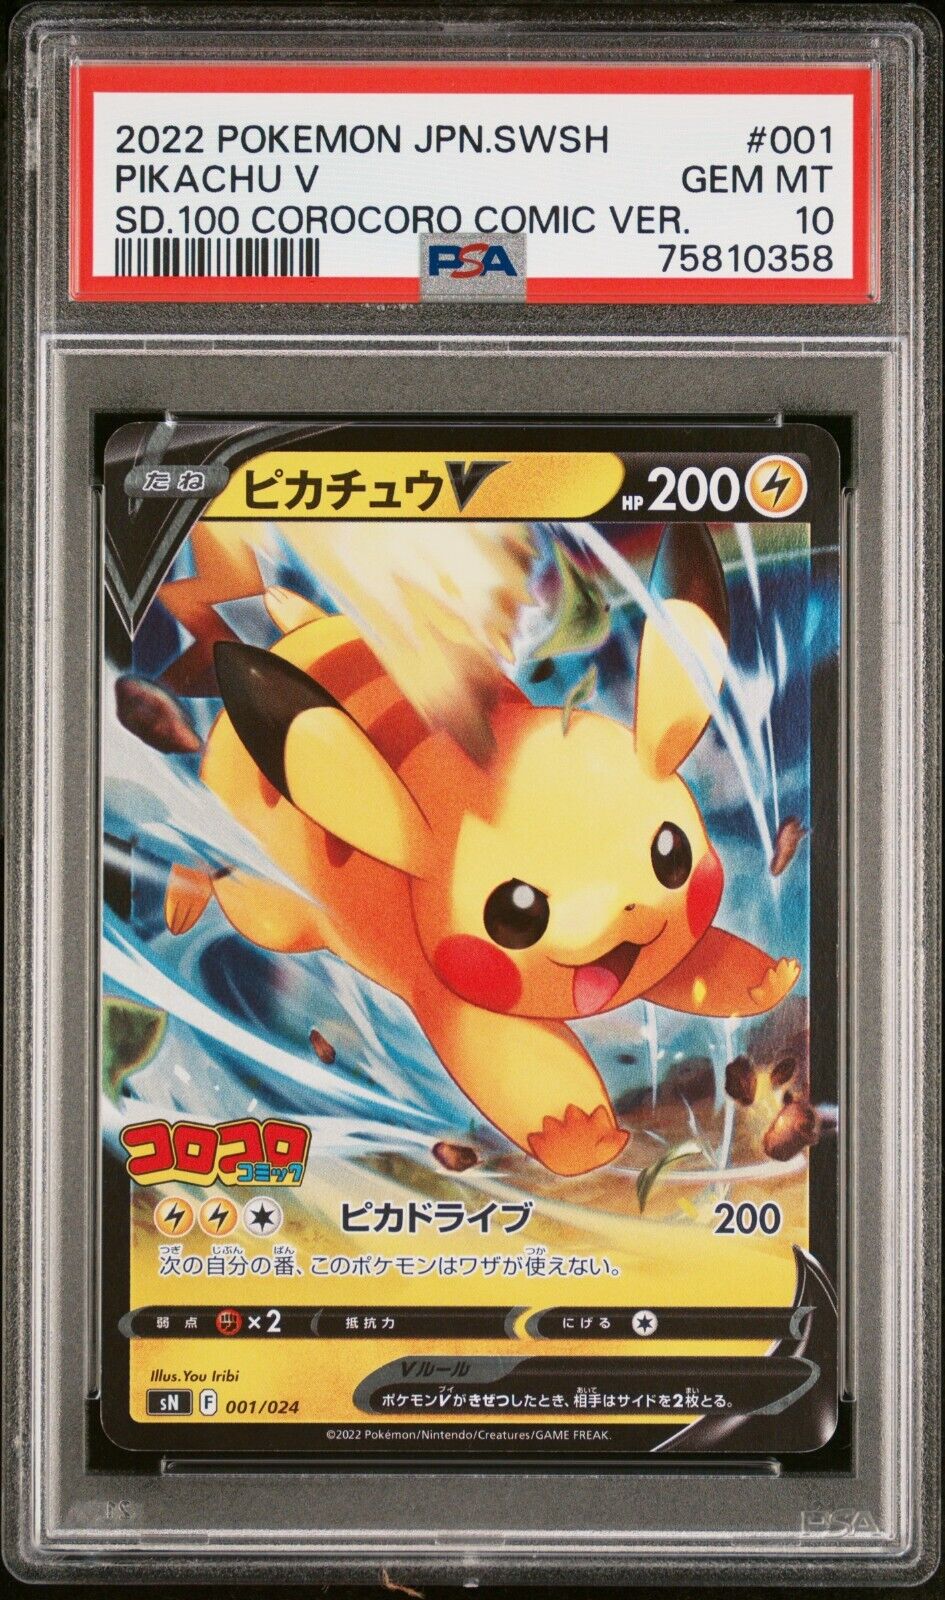 PSA 10 Pikachu V Start Deck 100 Corocoro Promo Pokemon Card Japanese 001/024